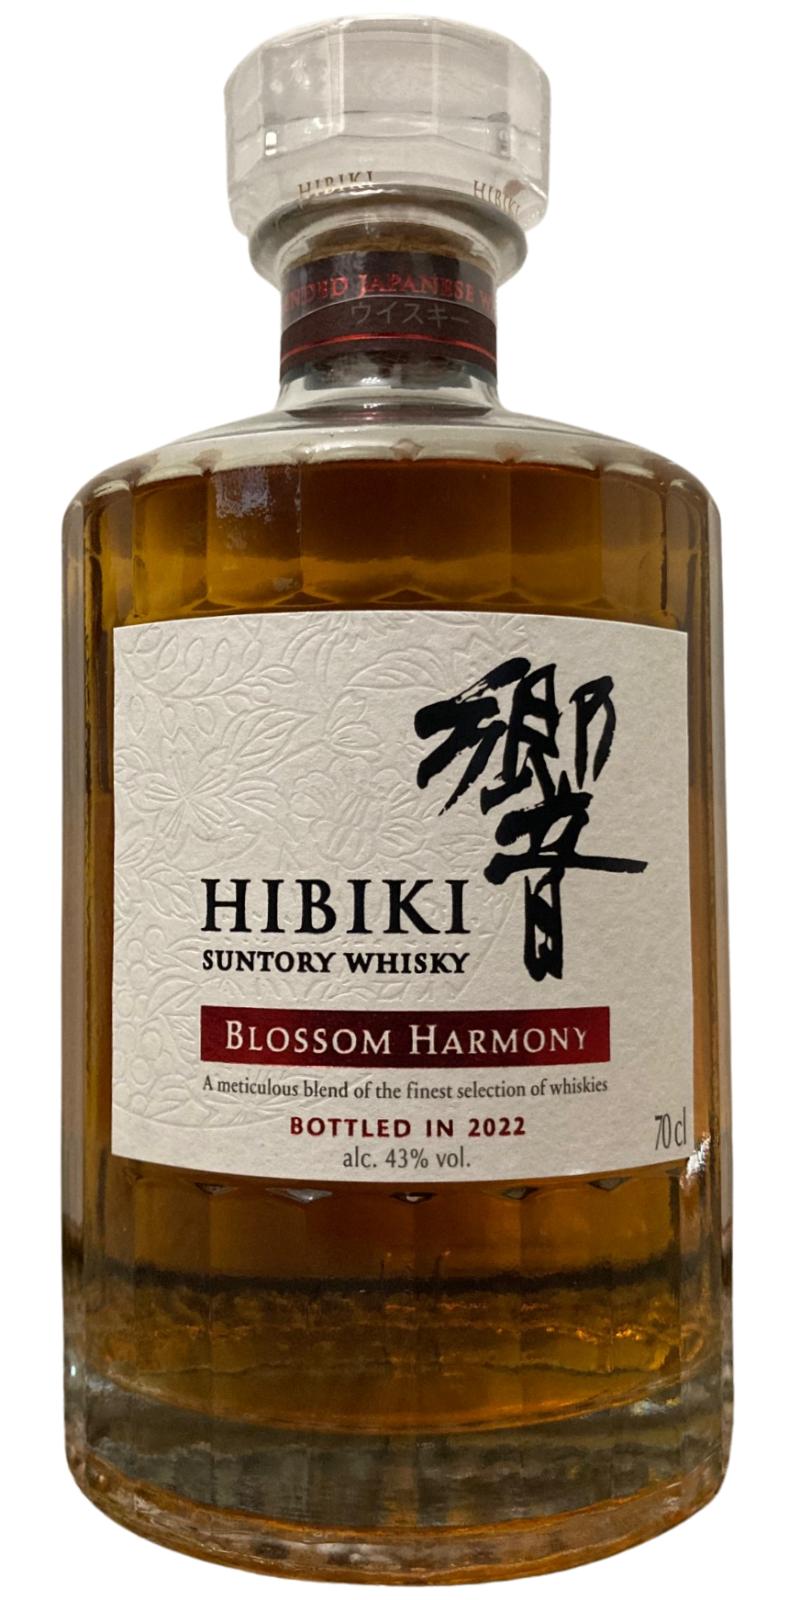 Hibiki Japanese Harmony - 30th Anniversary - Ratings and reviews -  Whiskybase